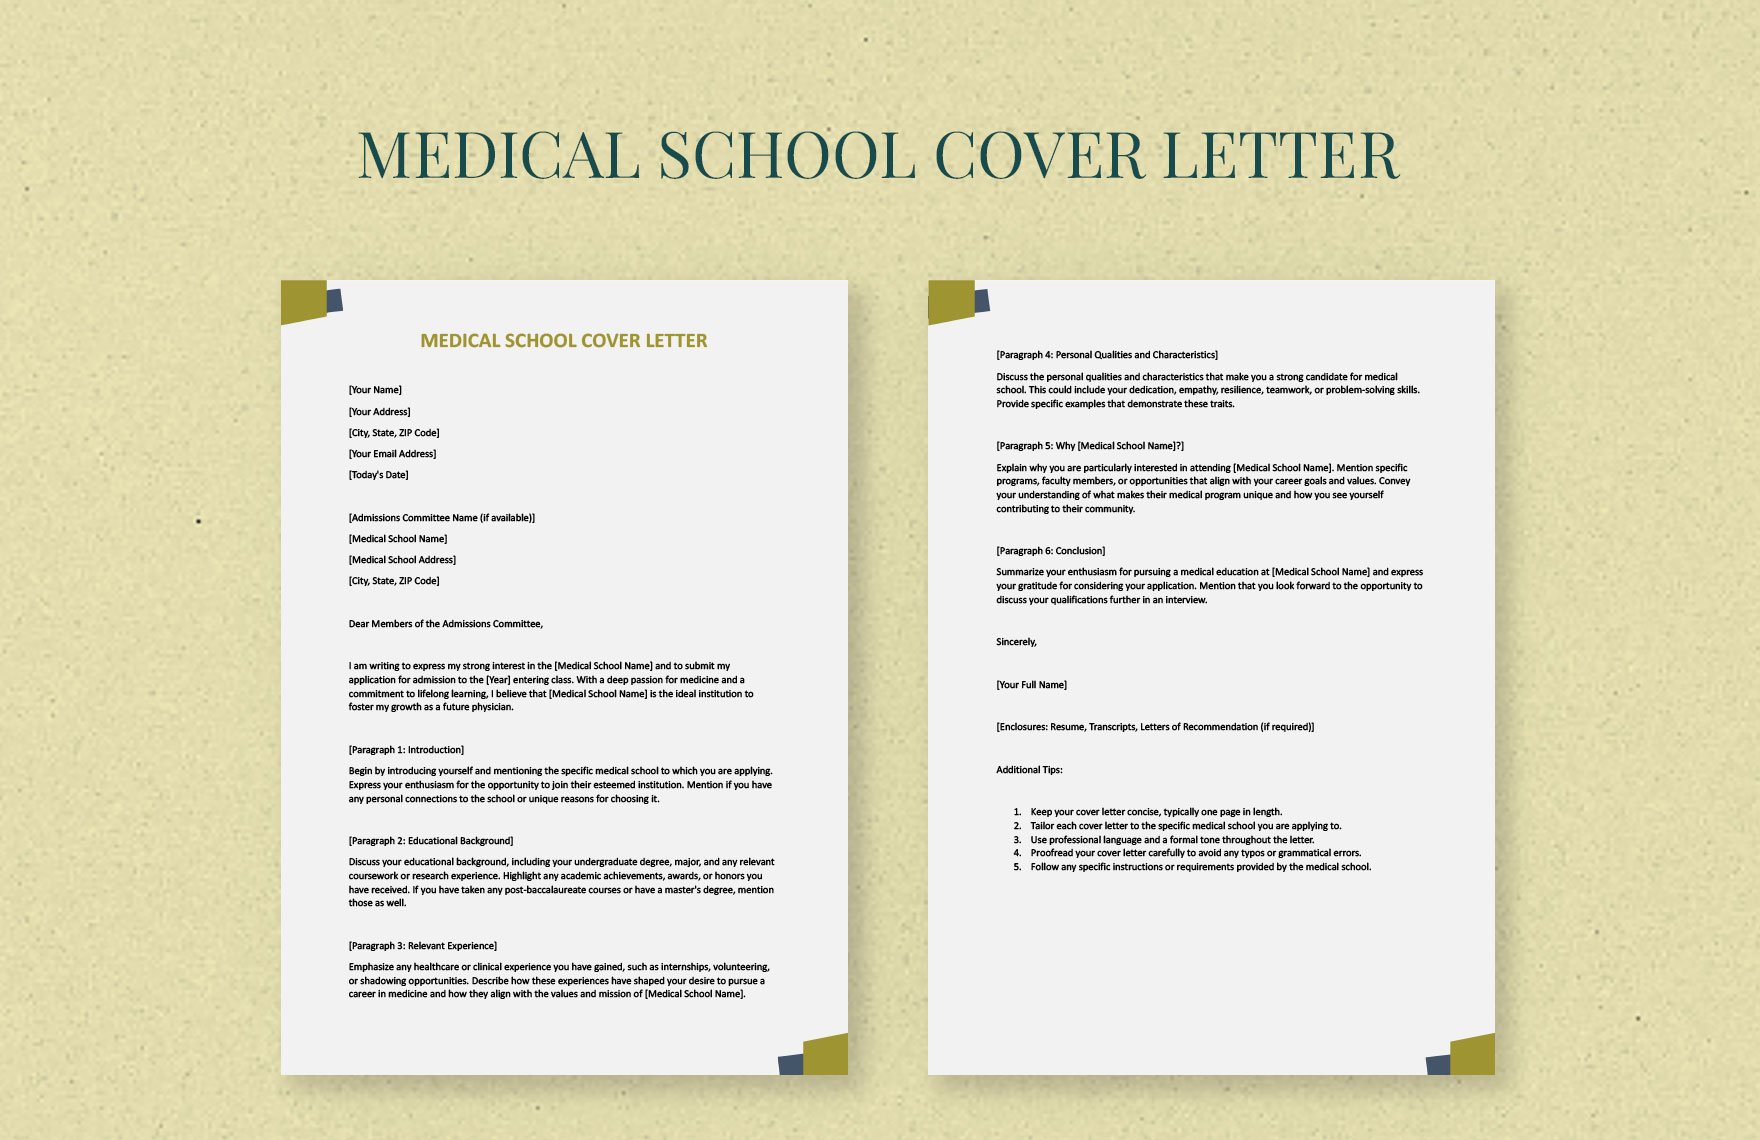 Medical school cover letter